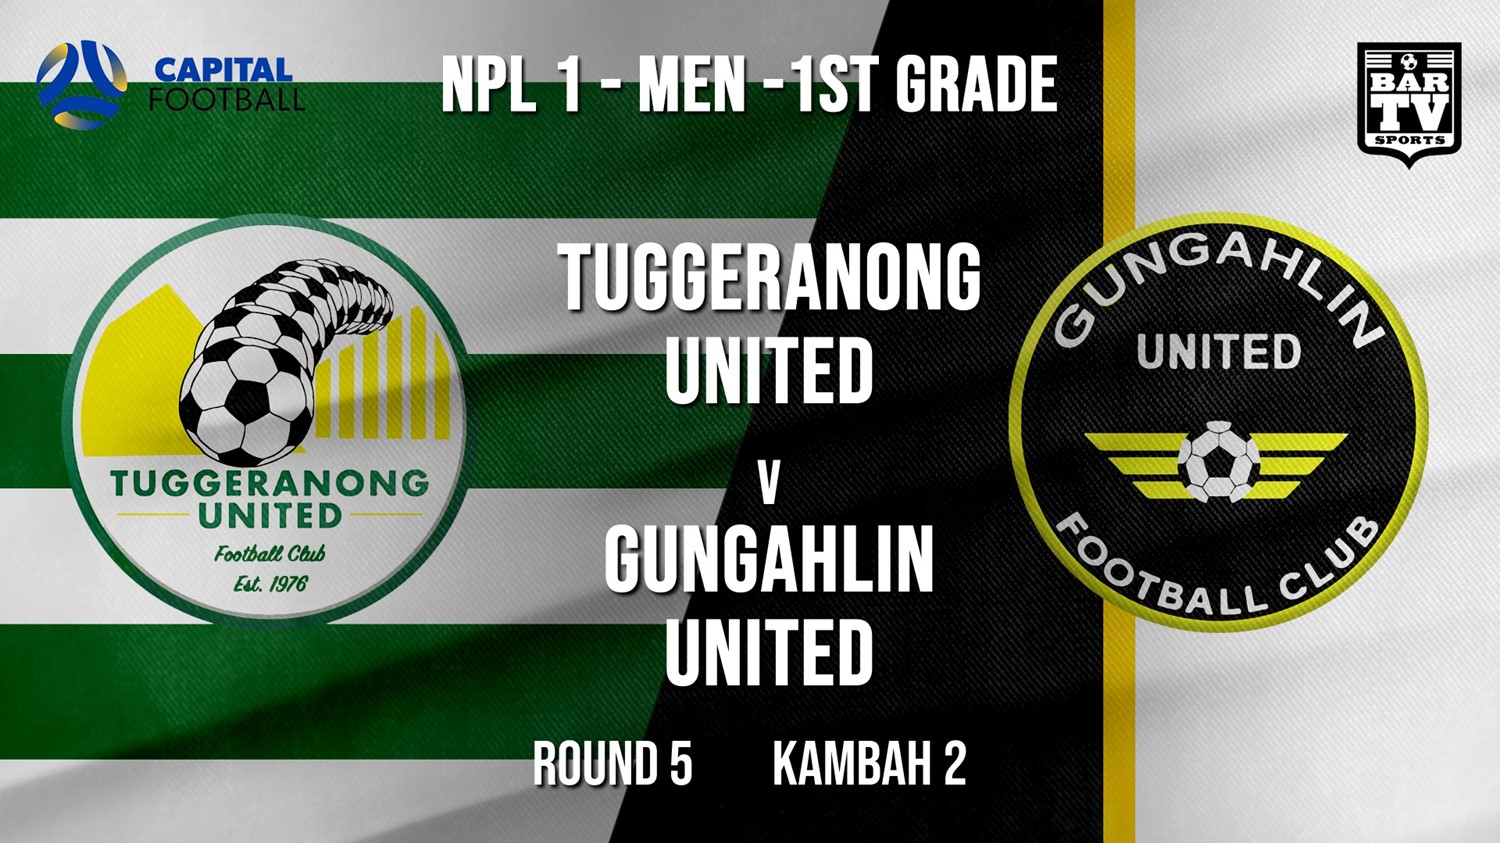 NPL - CAPITAL Round 5 - Tuggeranong United FC v Gungahlin United FC Minigame Slate Image